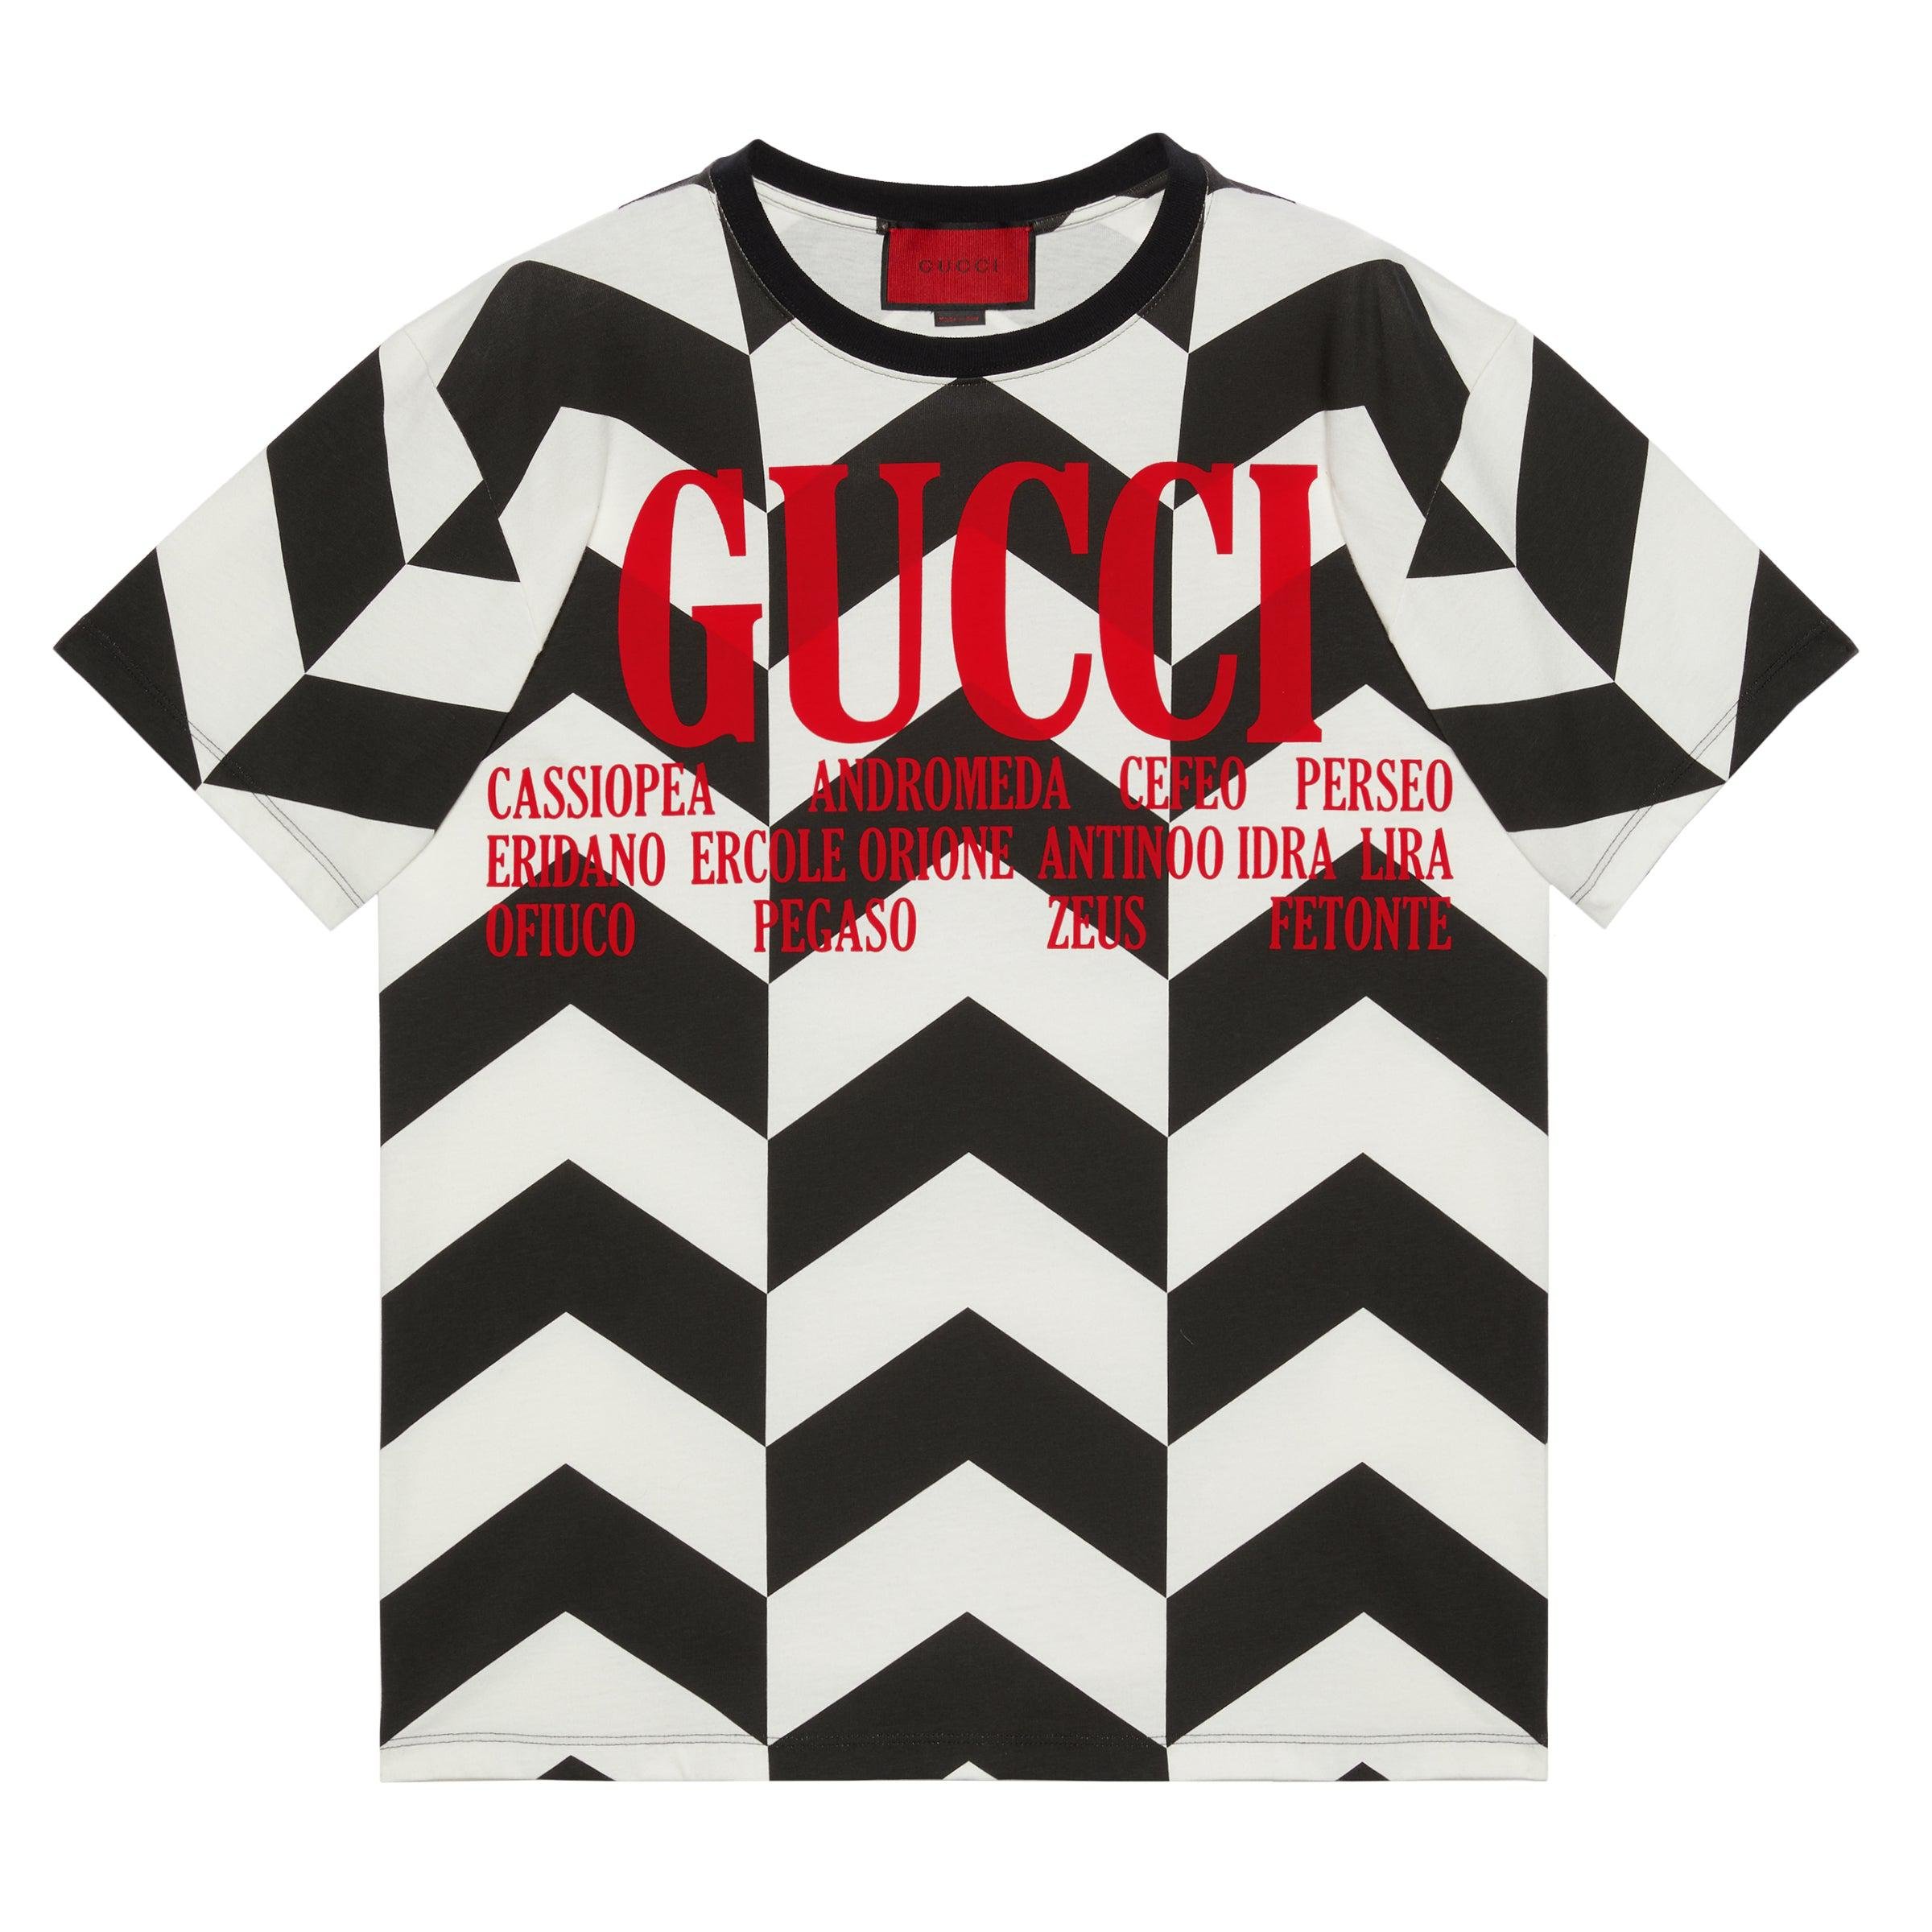 Gucci - Men’s DSM Exclusive Chevron Printed T-Shirt - (Black/White) by GUCCI